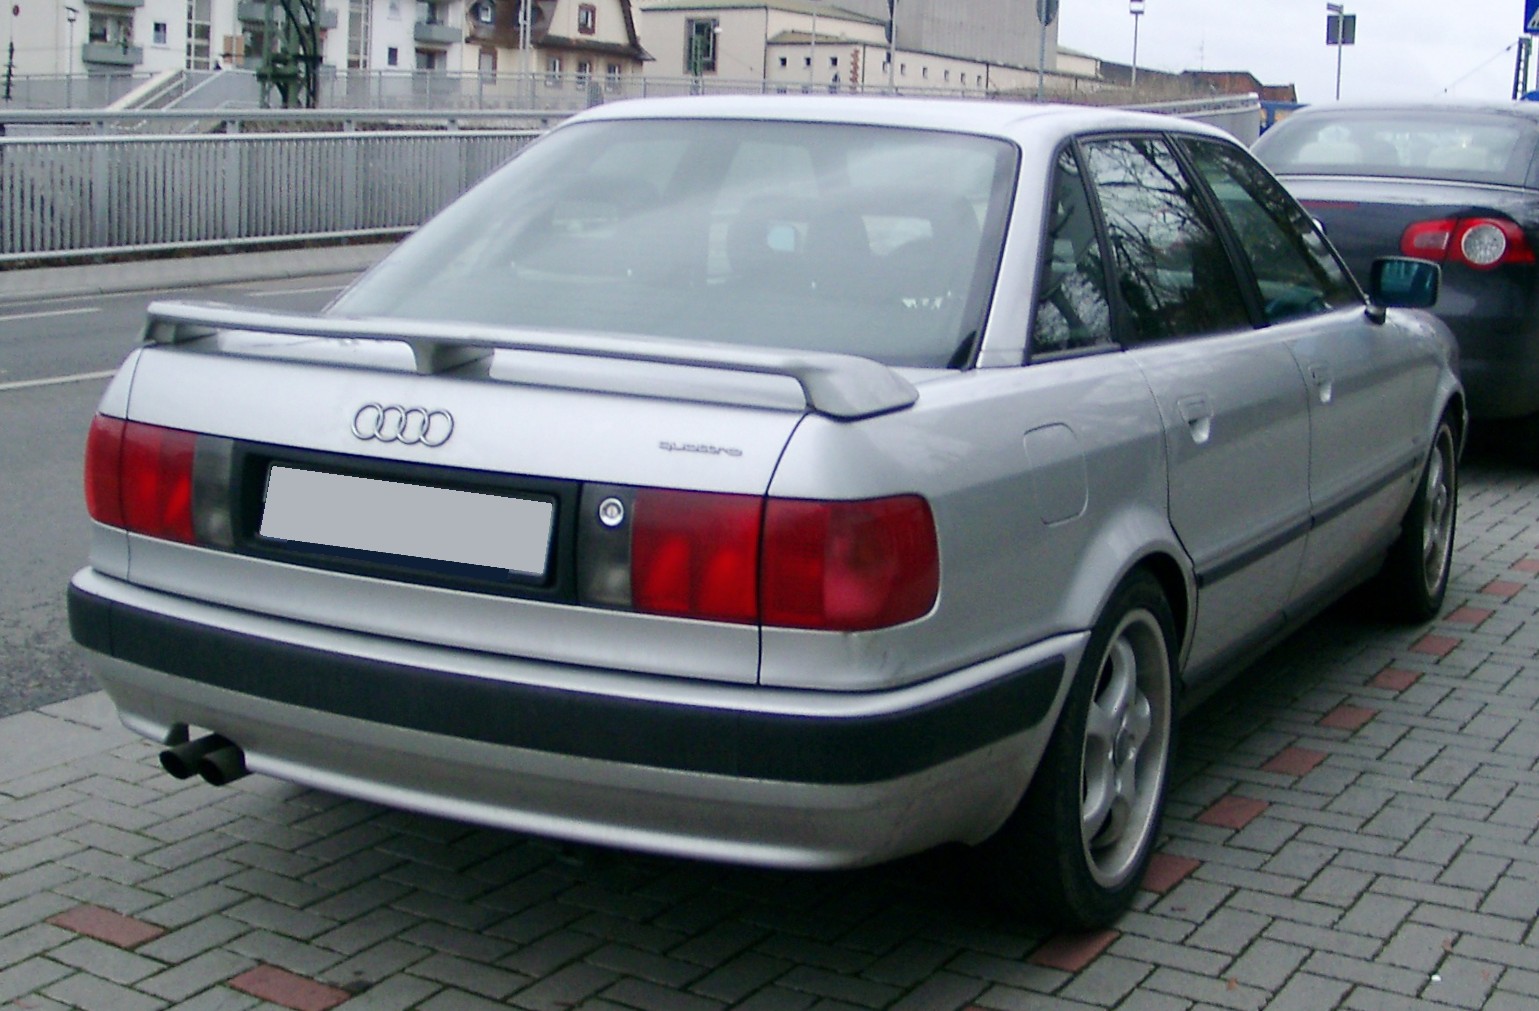 Audi_80_B4_rear_20071206.jpg